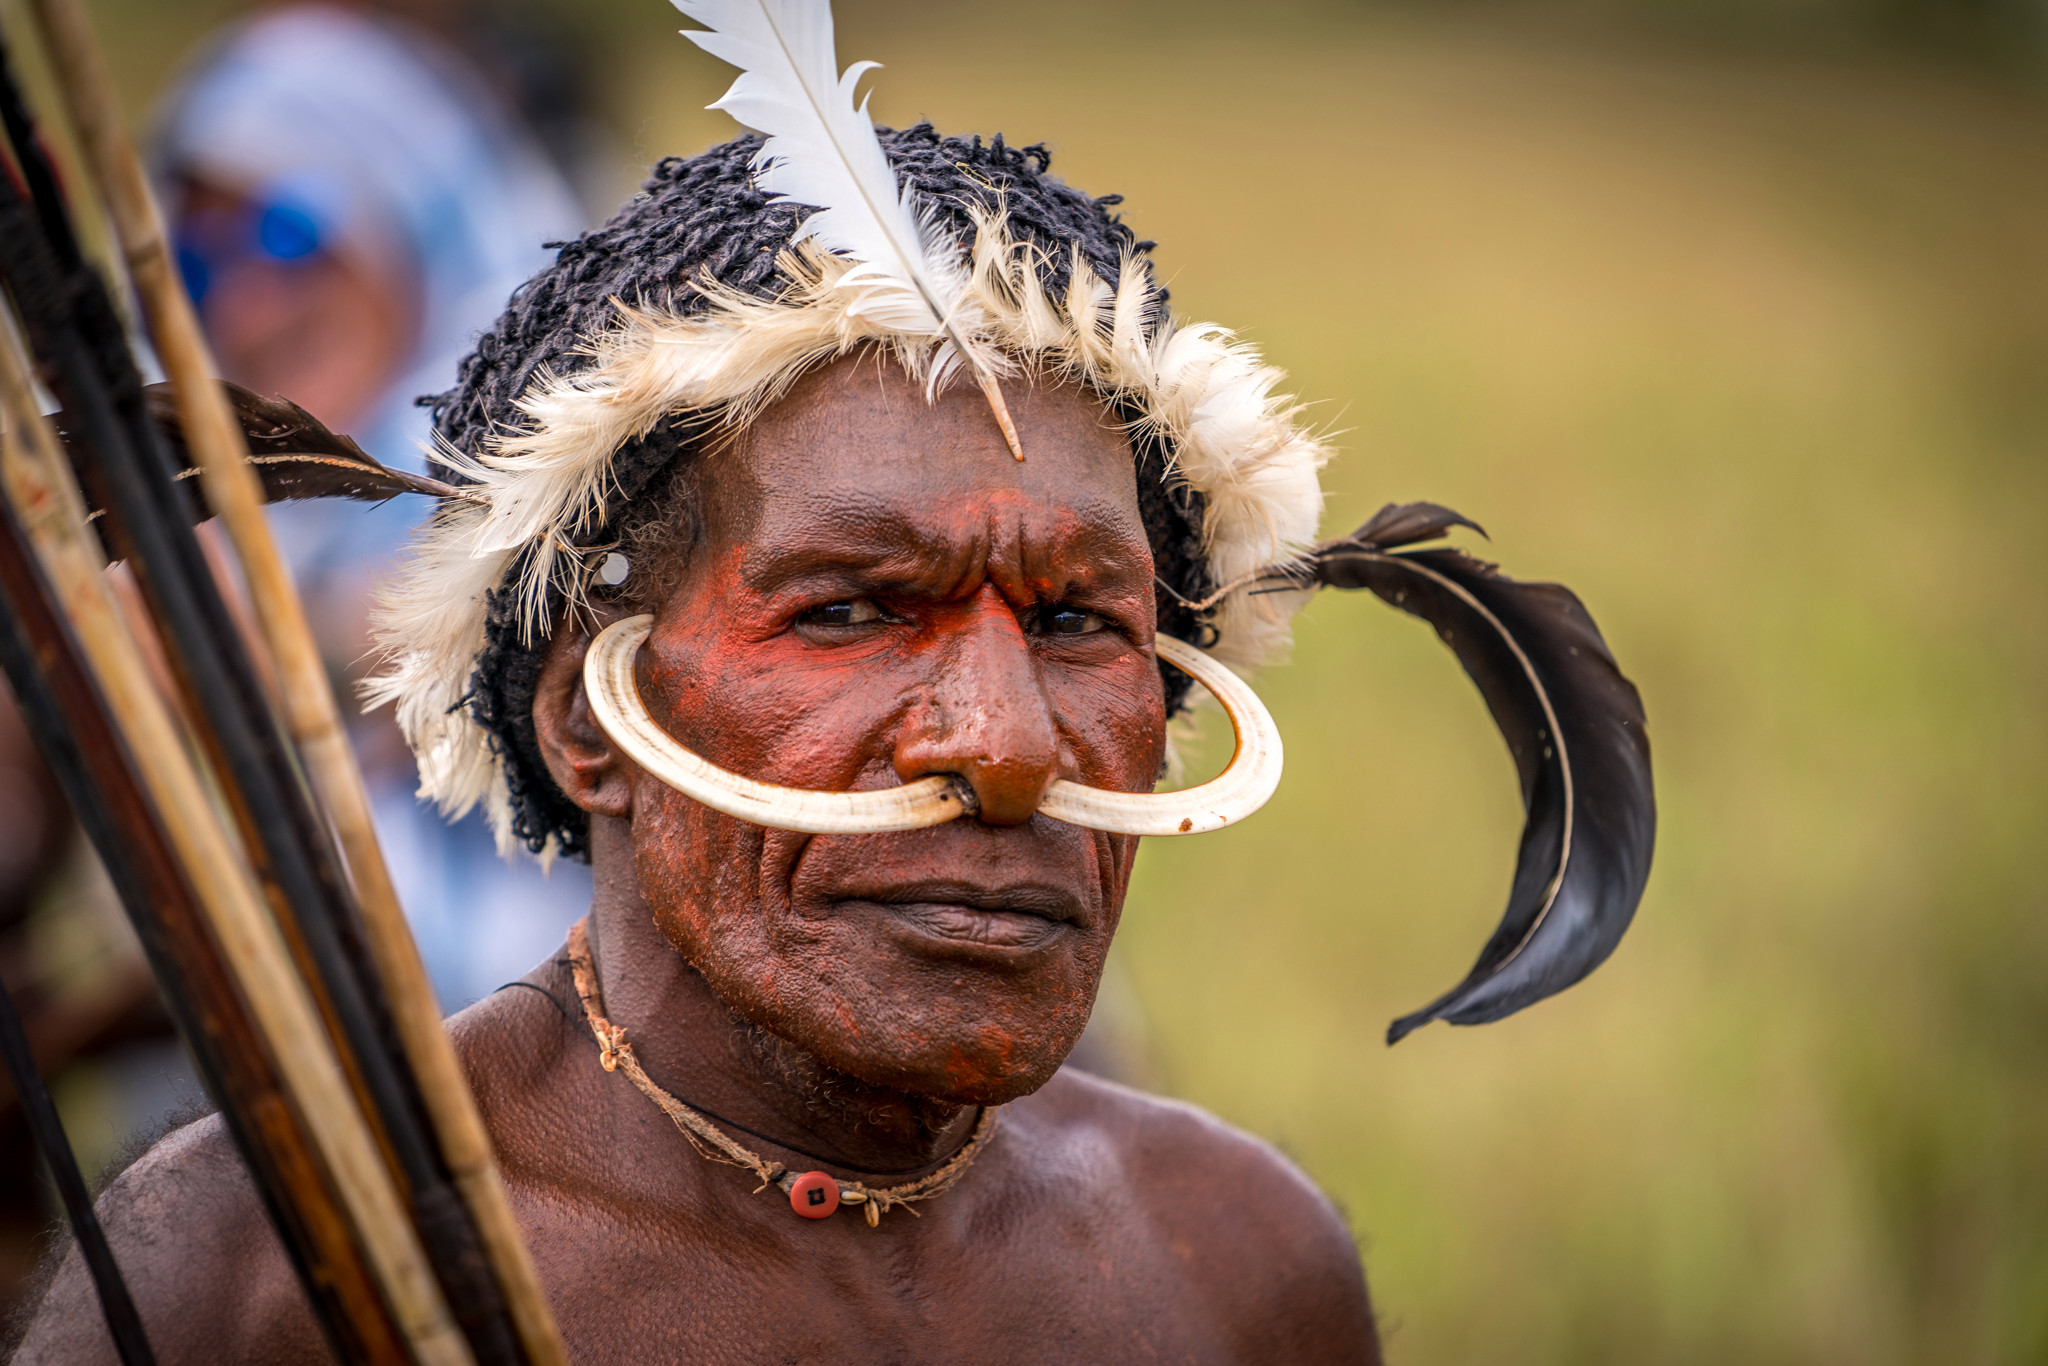 Аборигены малайзии 4 буквы. Племя новая Гвинея Дани Гвинея. Папуа новая Гвинея племя комбаи.